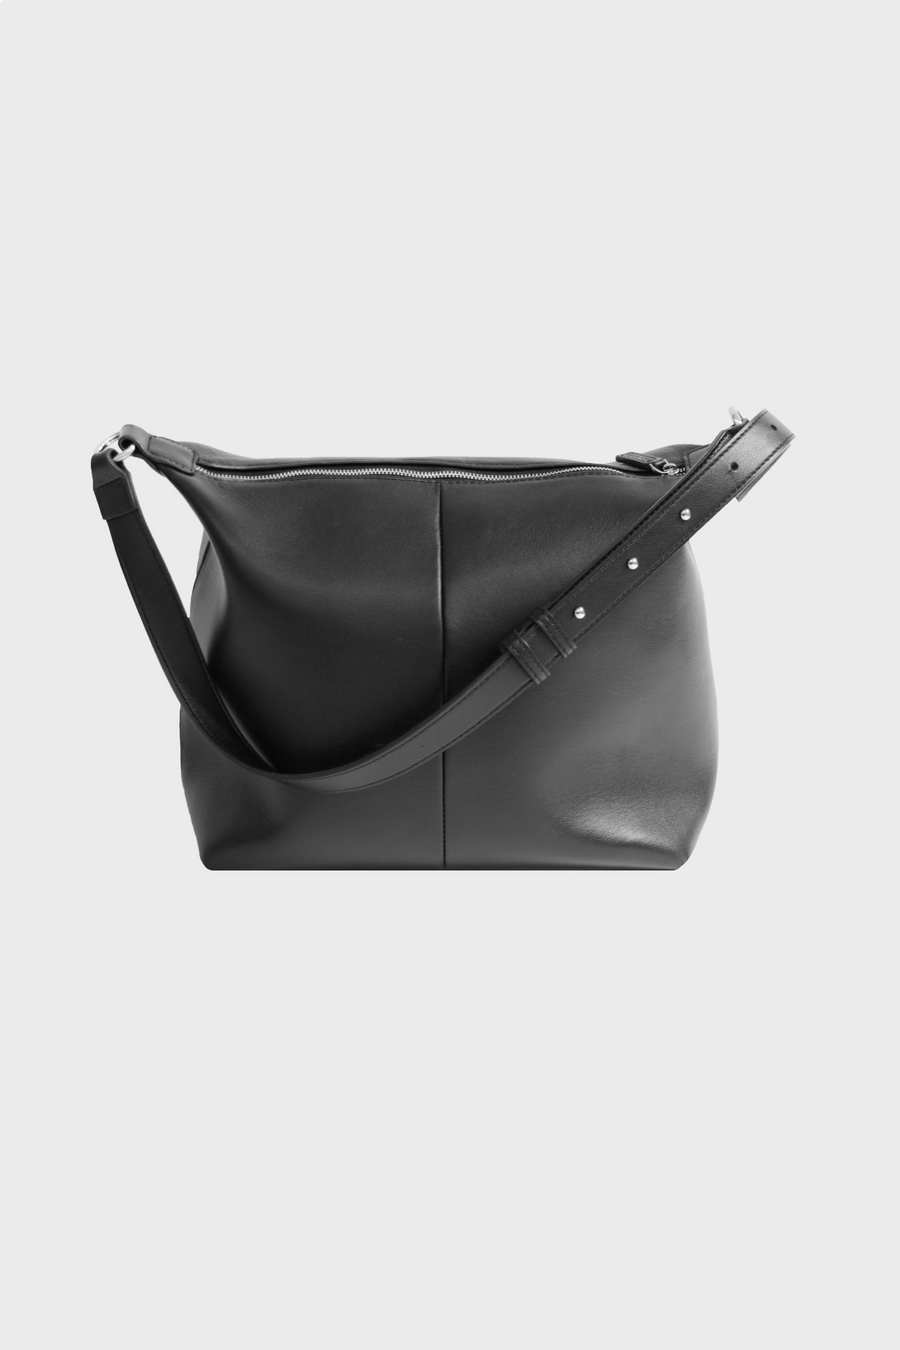 Each Other x Elizabeth Sulcer Soft Leather Large Hobo Bag